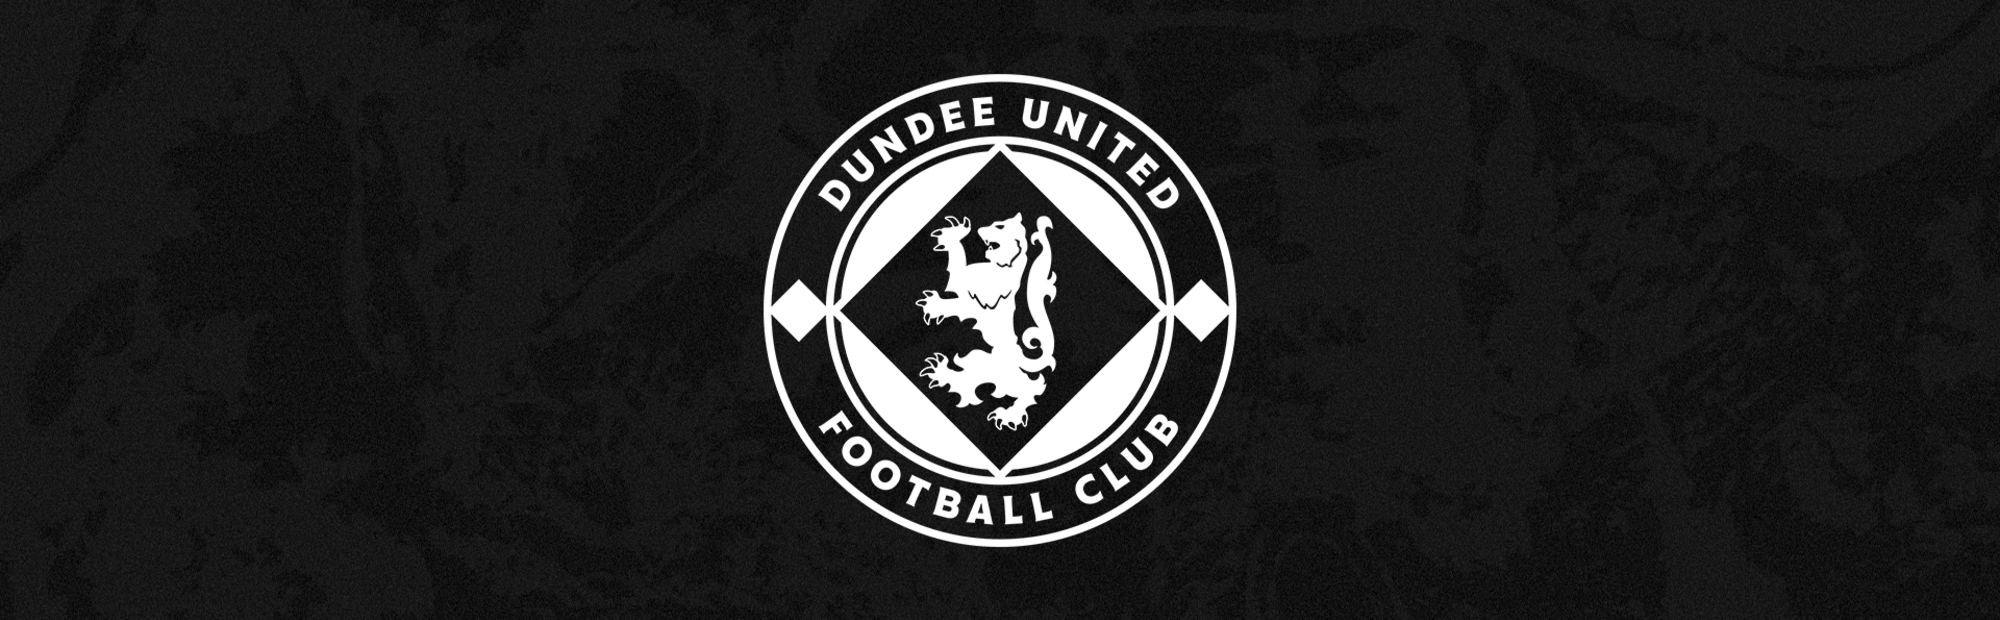 CLUB STATEMENT | Dundee United Football Club